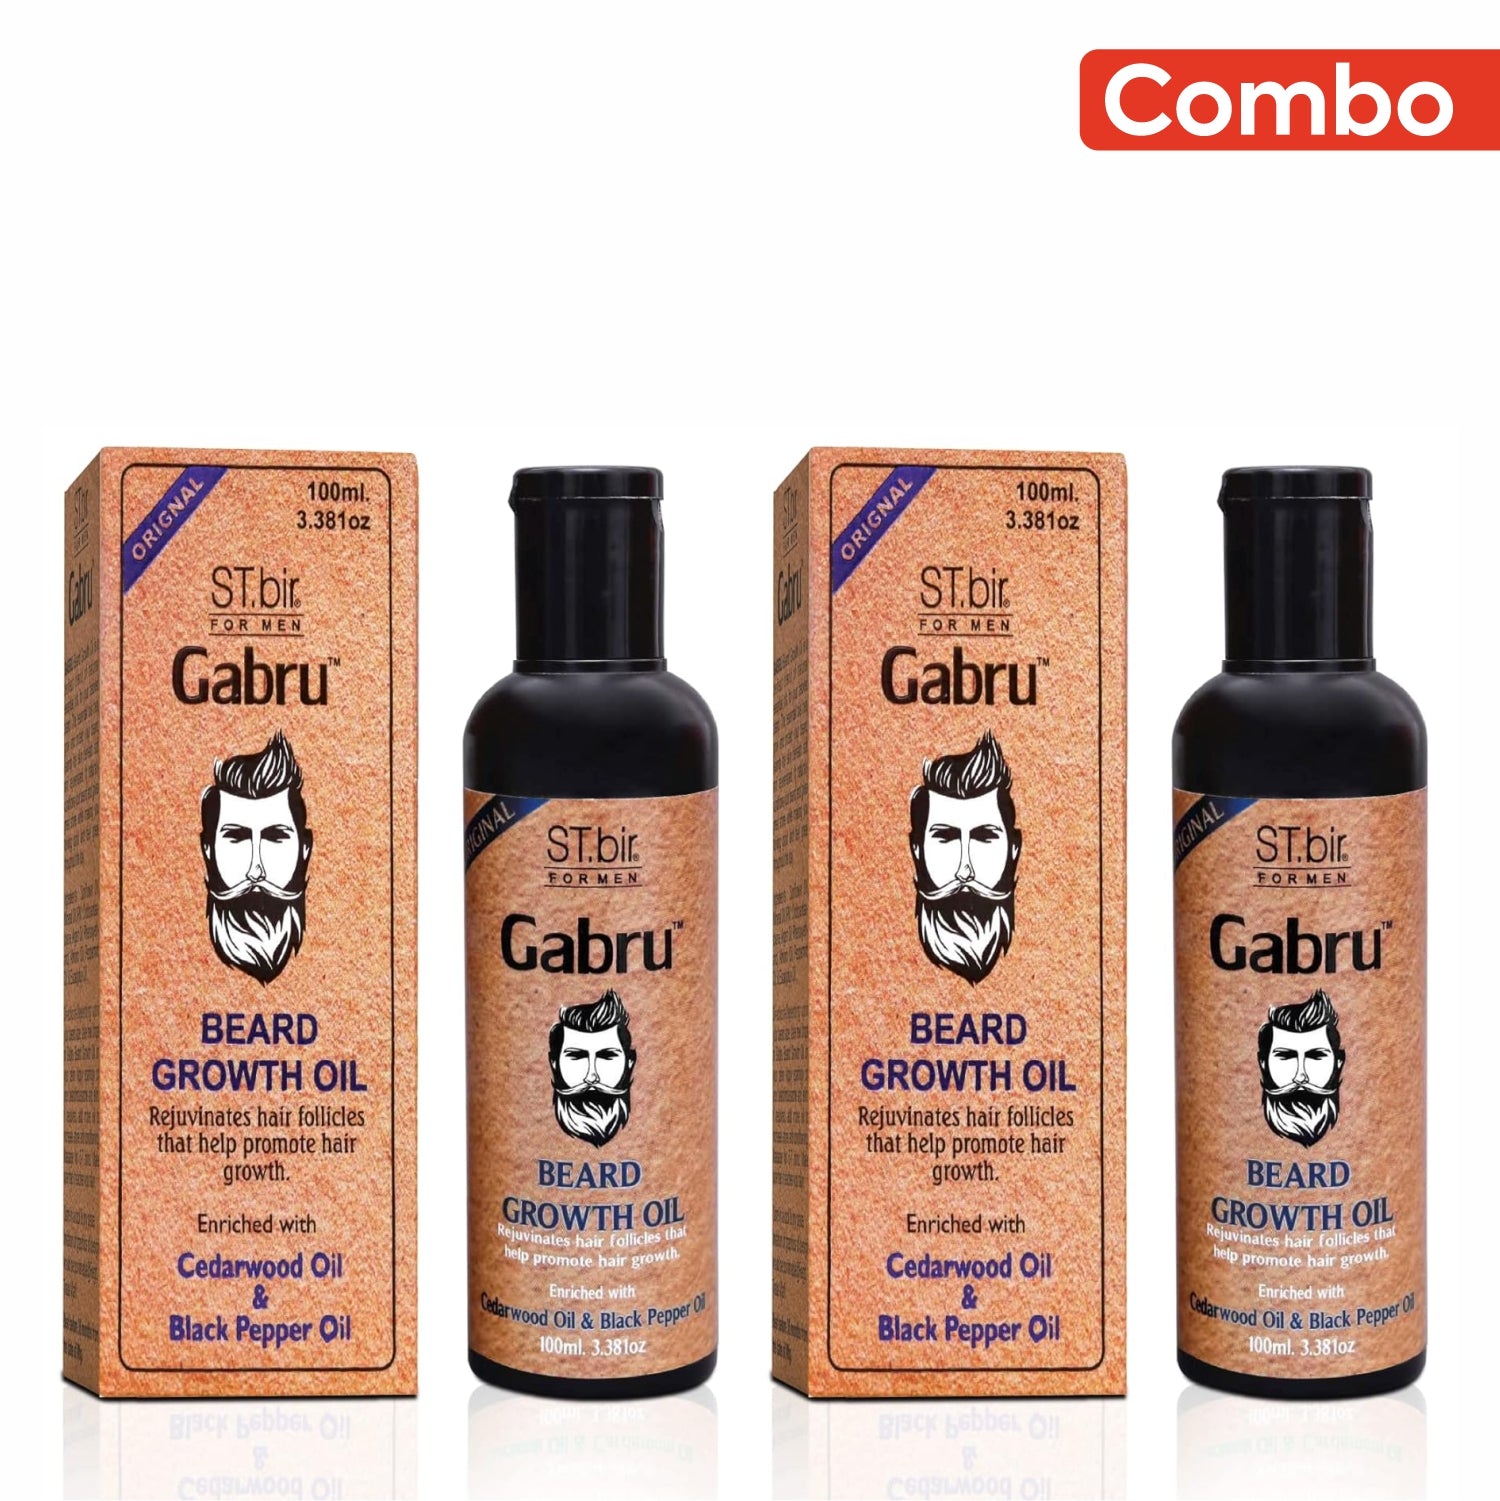 ST.bir Gabru Beard Oil Cedarwood & Black Pepper Oil (Pack of 2)